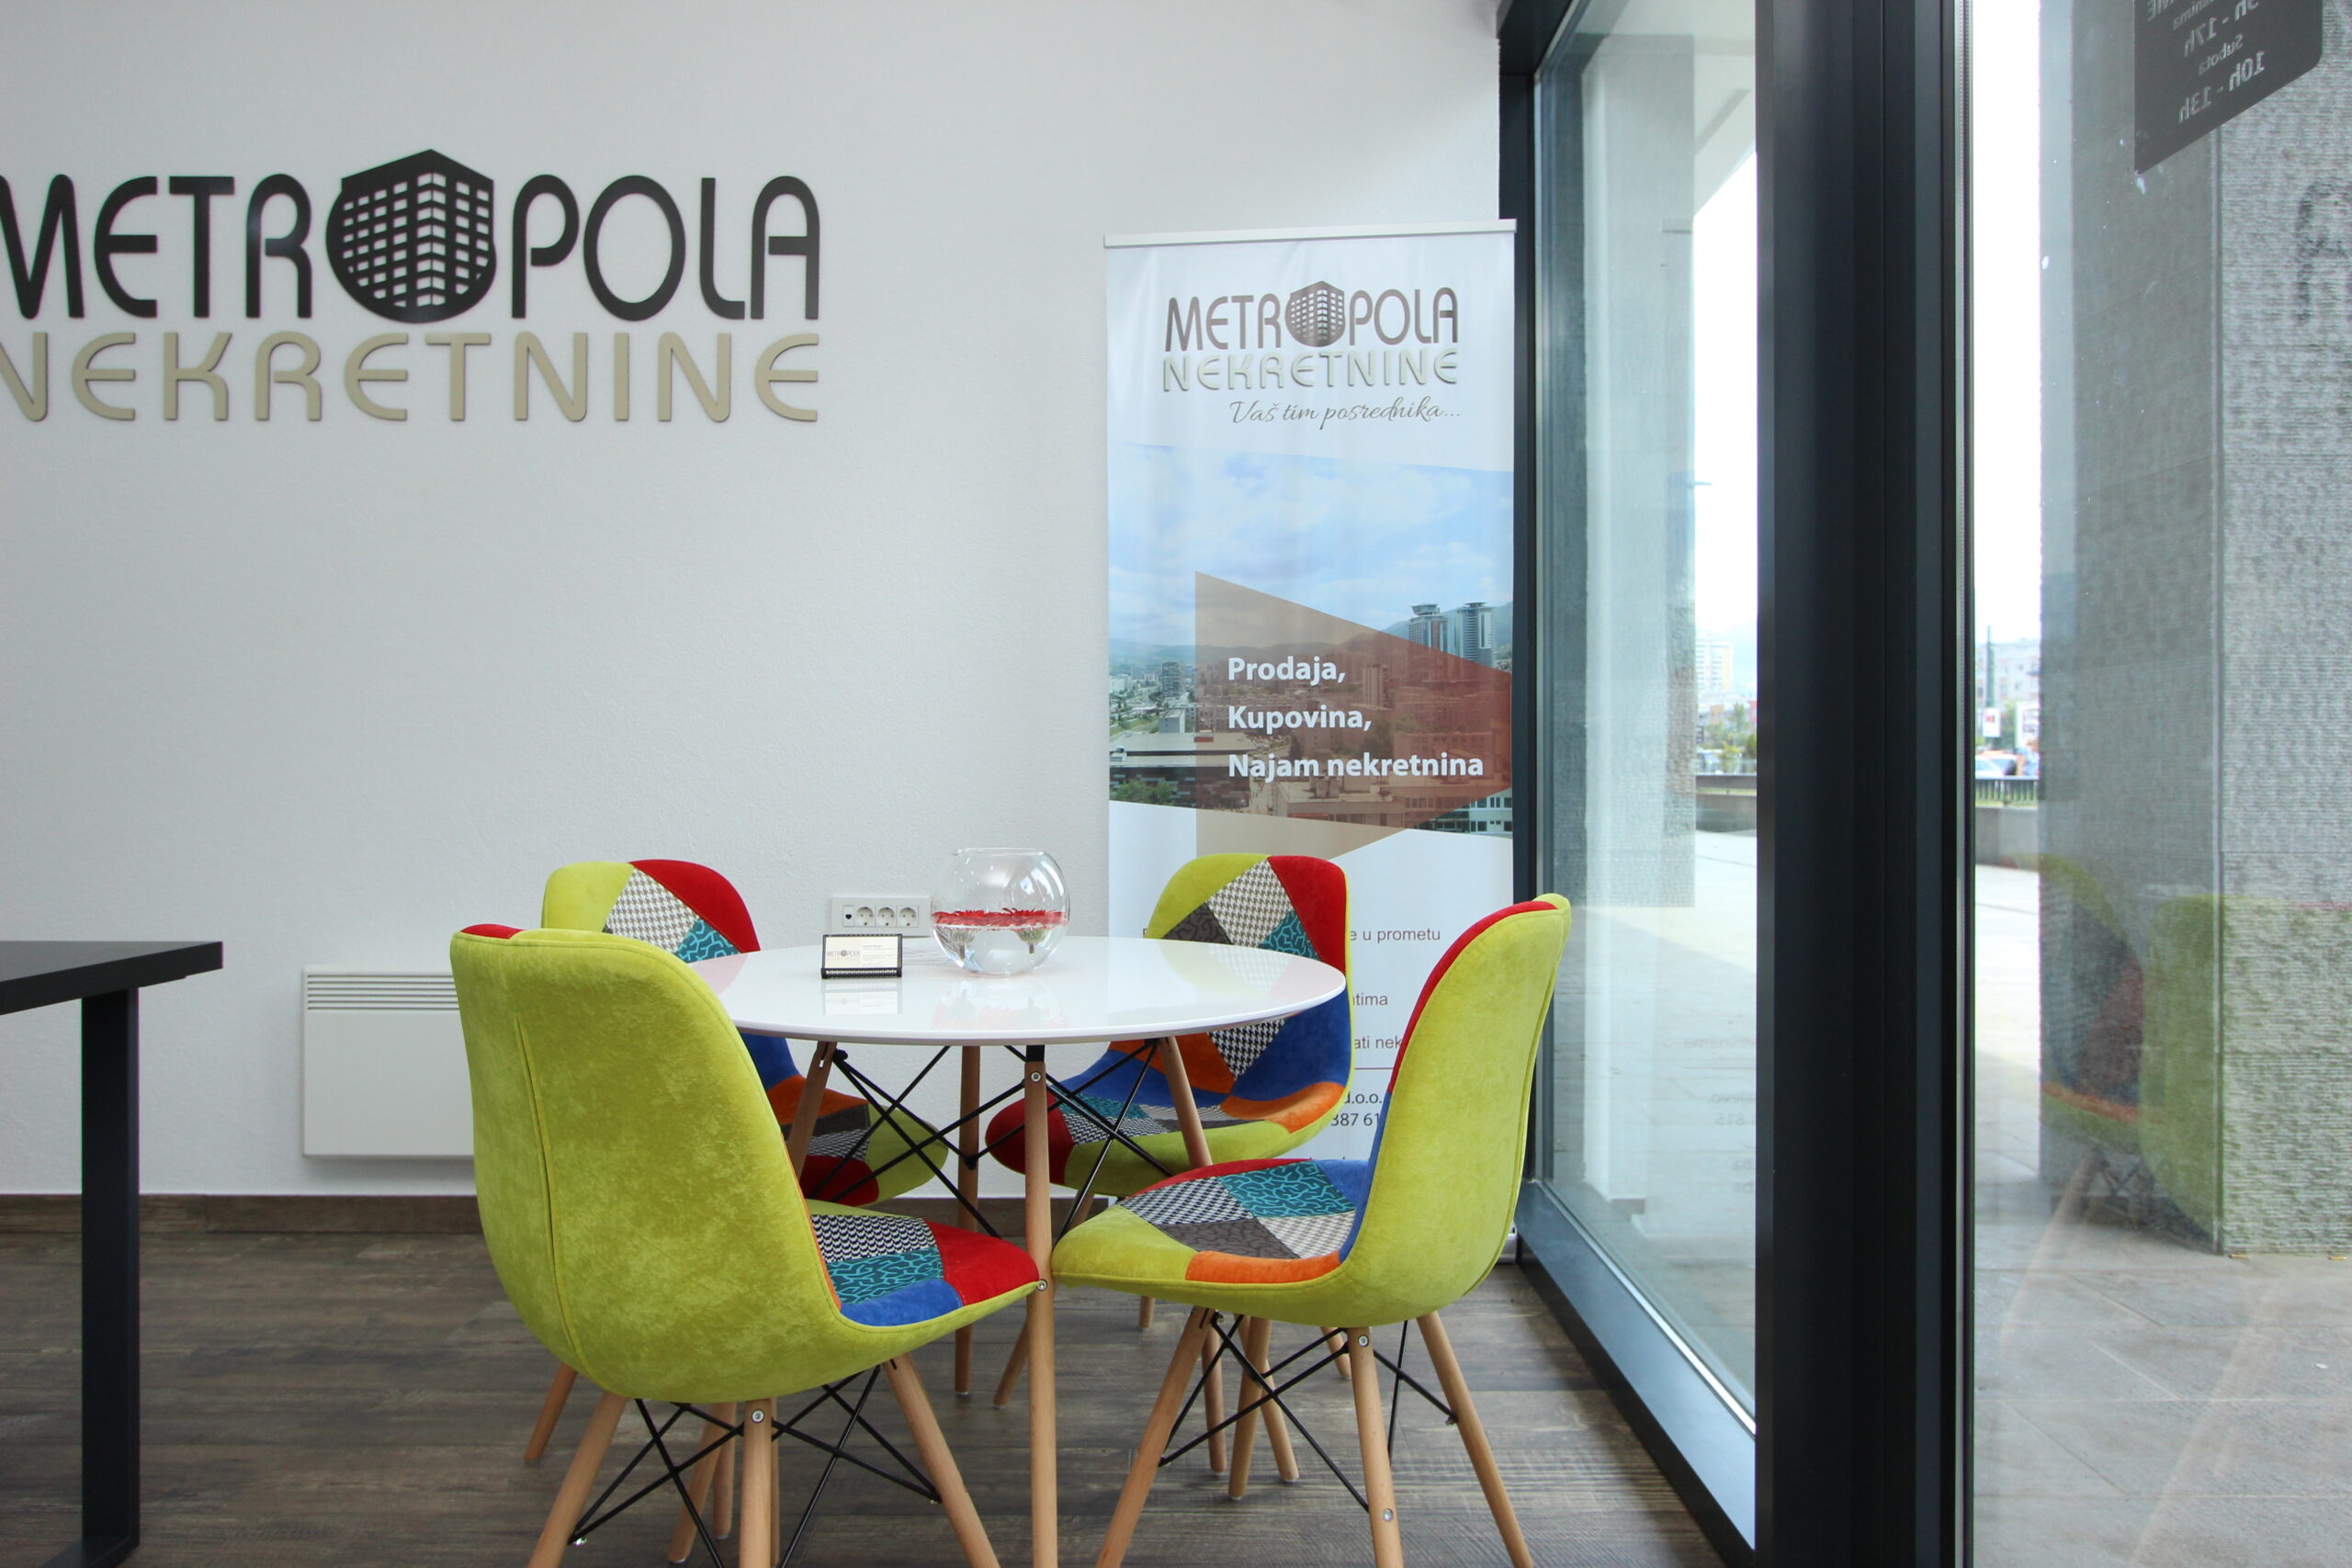  Metropola nekretnine – Logical Choice of Real Estate Agents